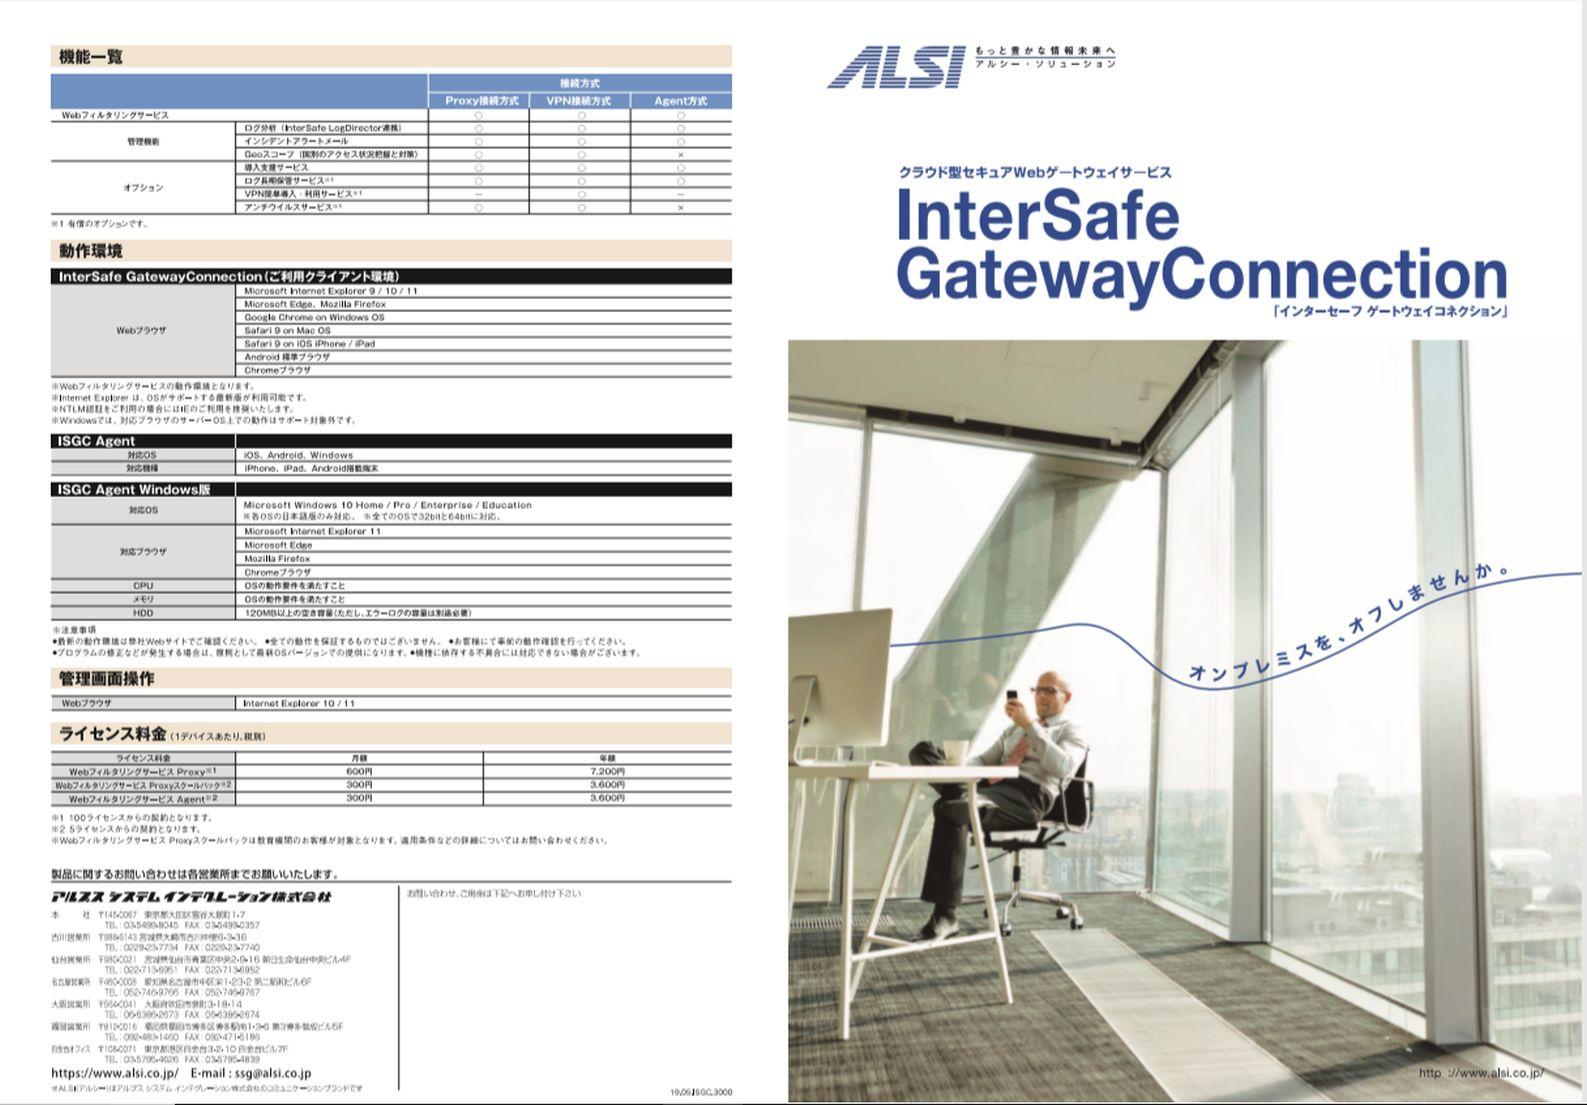 InterSafe GatewayConnection
カタログ（A3サイズ印刷用）